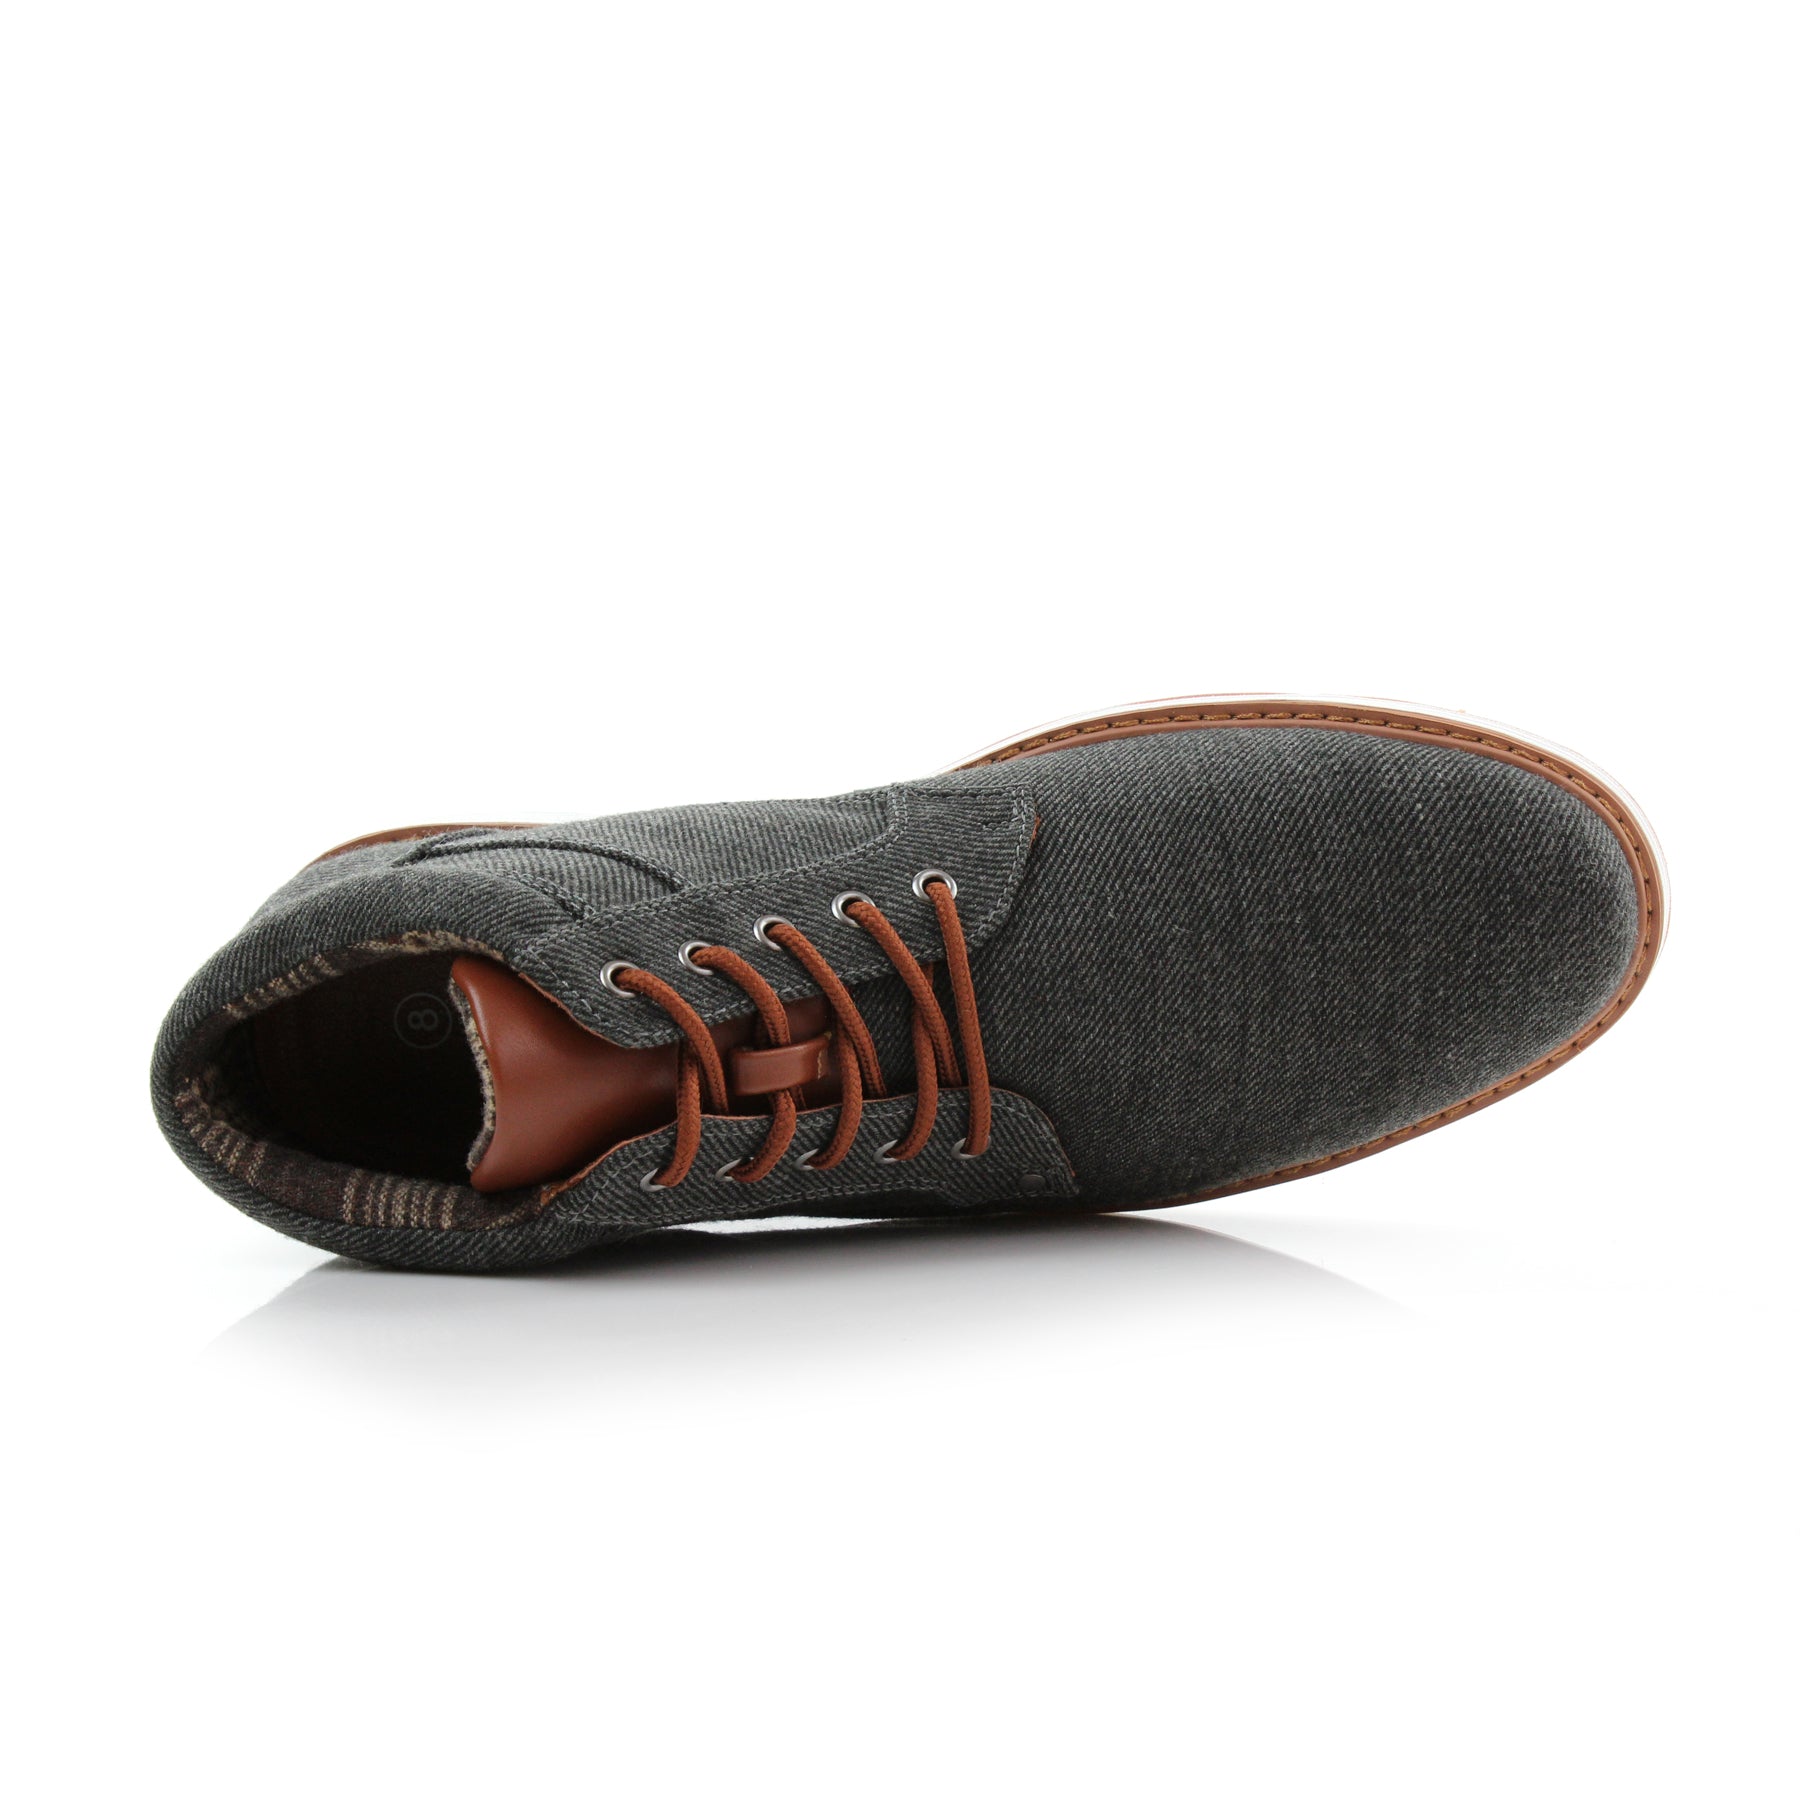 Denim Sneakers | Jax by Ferro Aldo | Conal Footwear | Top-Down Angle View